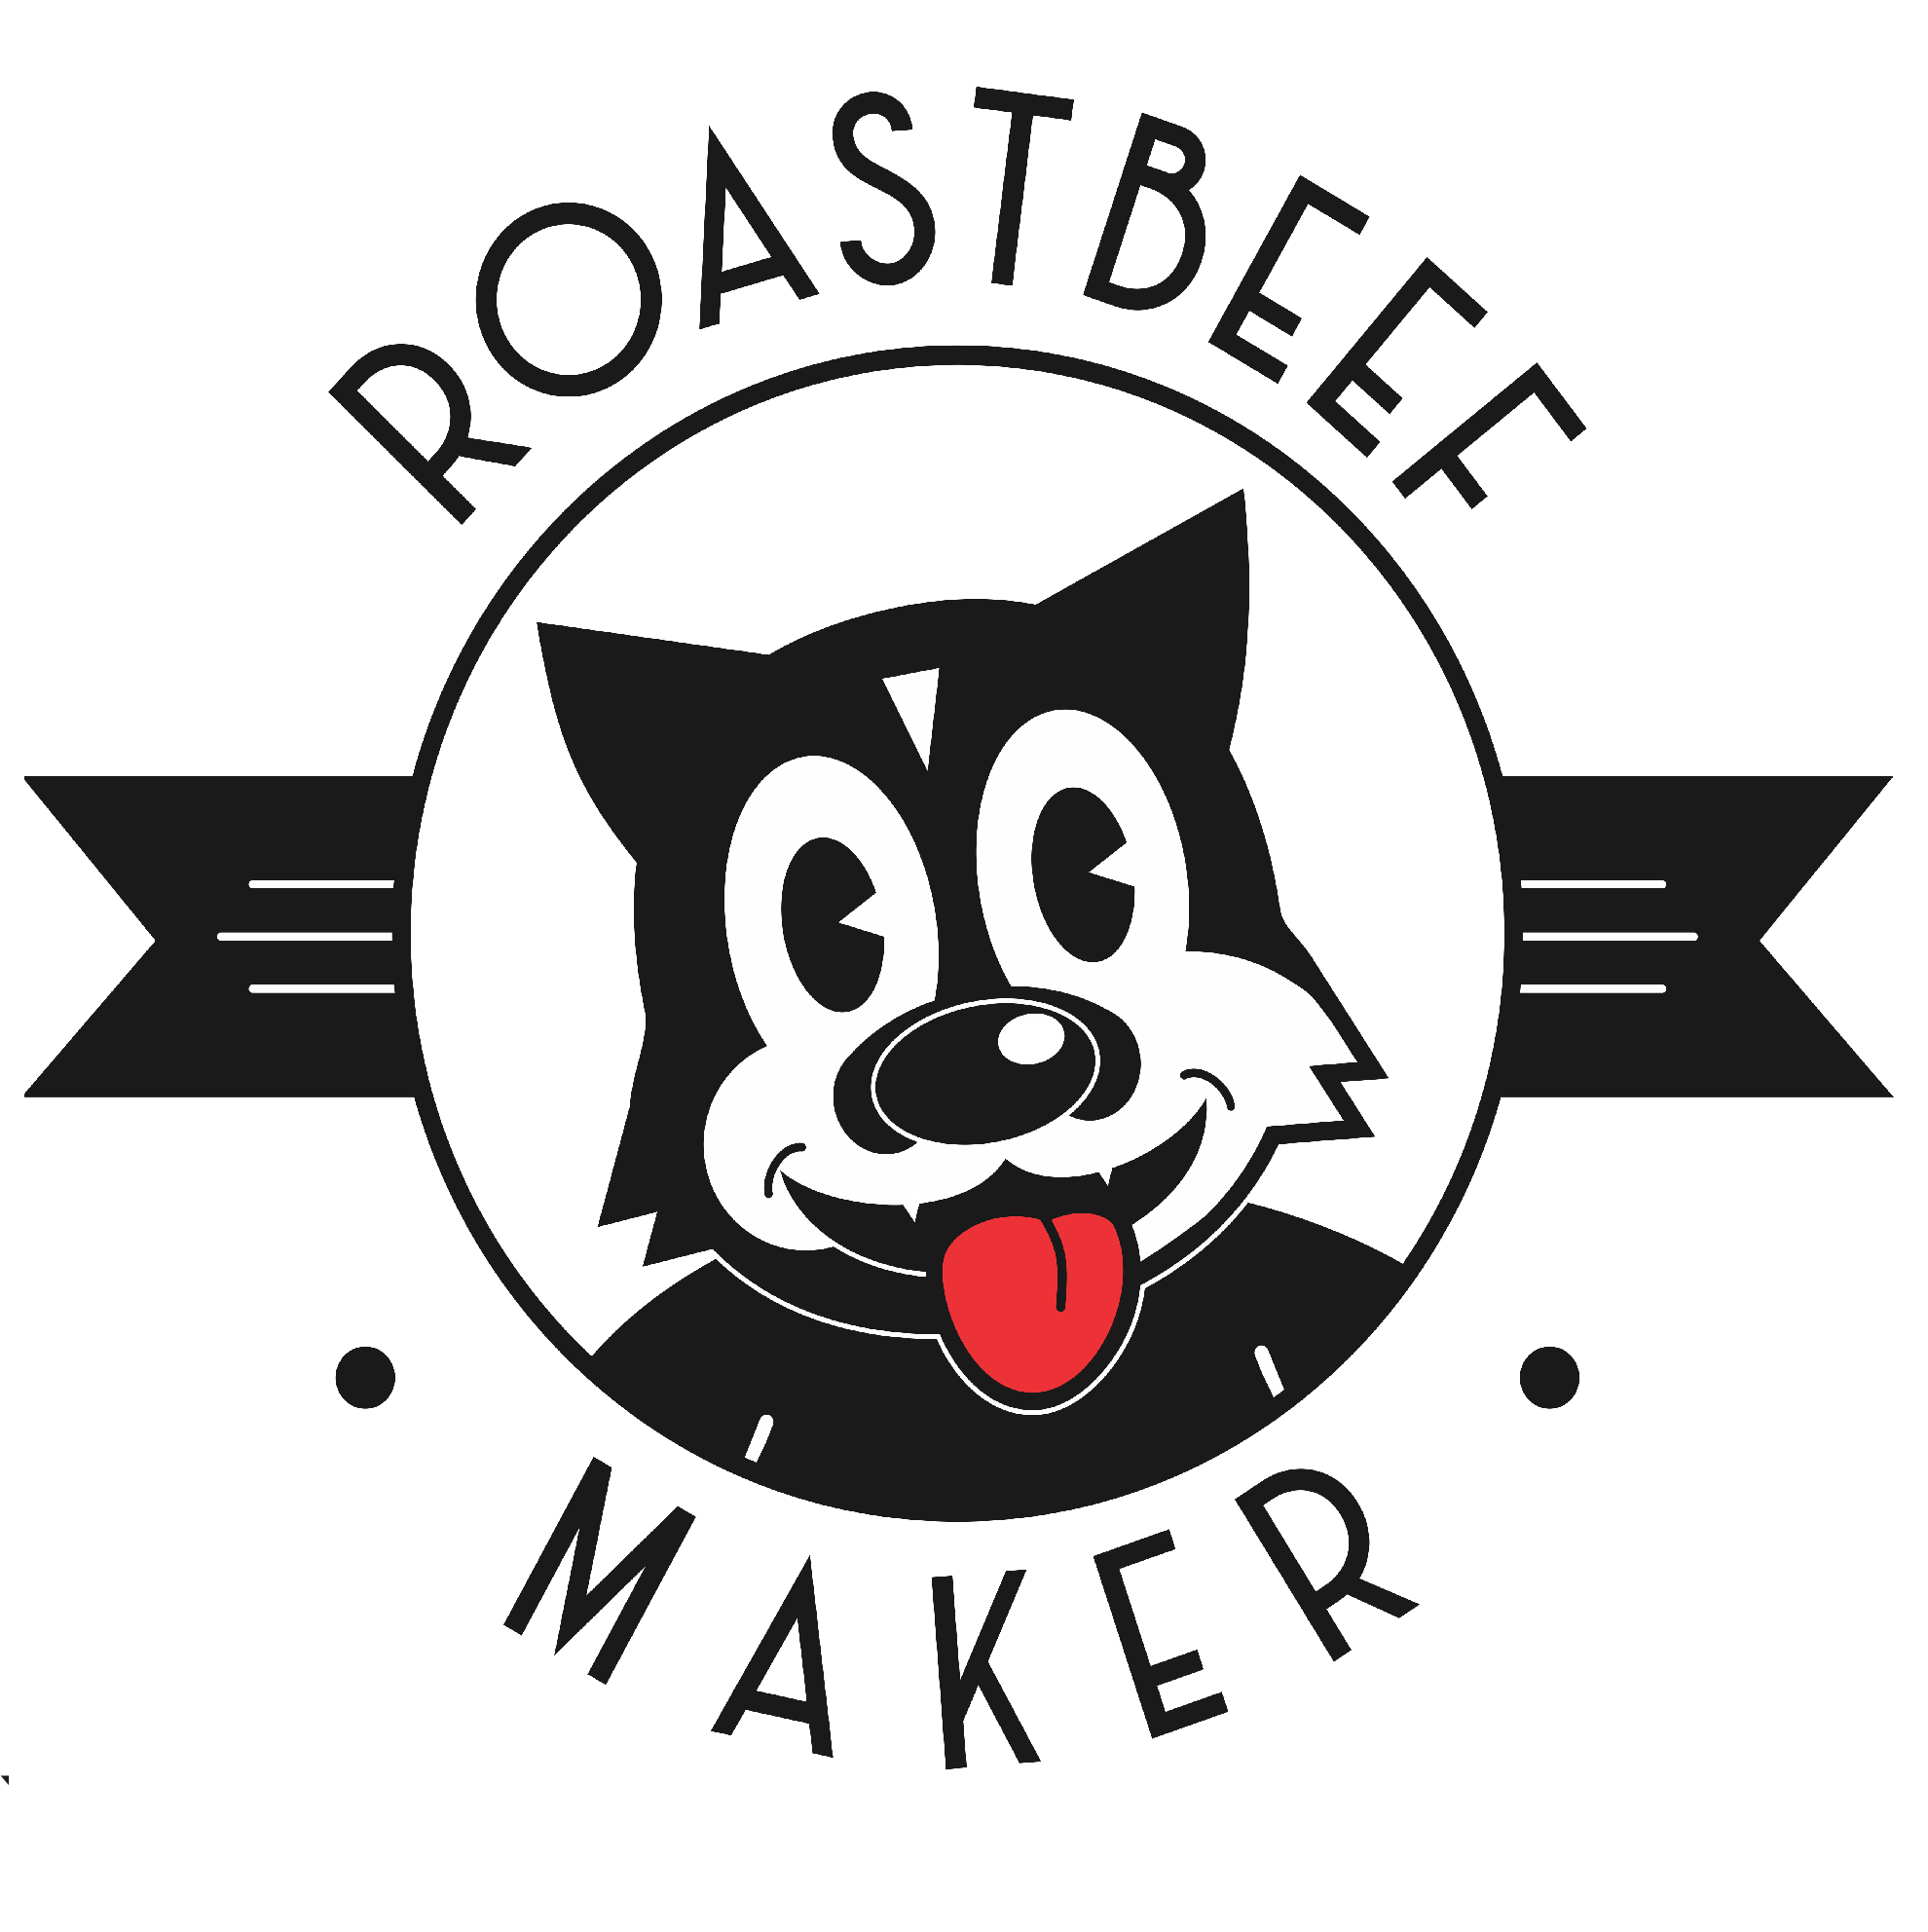 Logotipo Roastbeef Maker